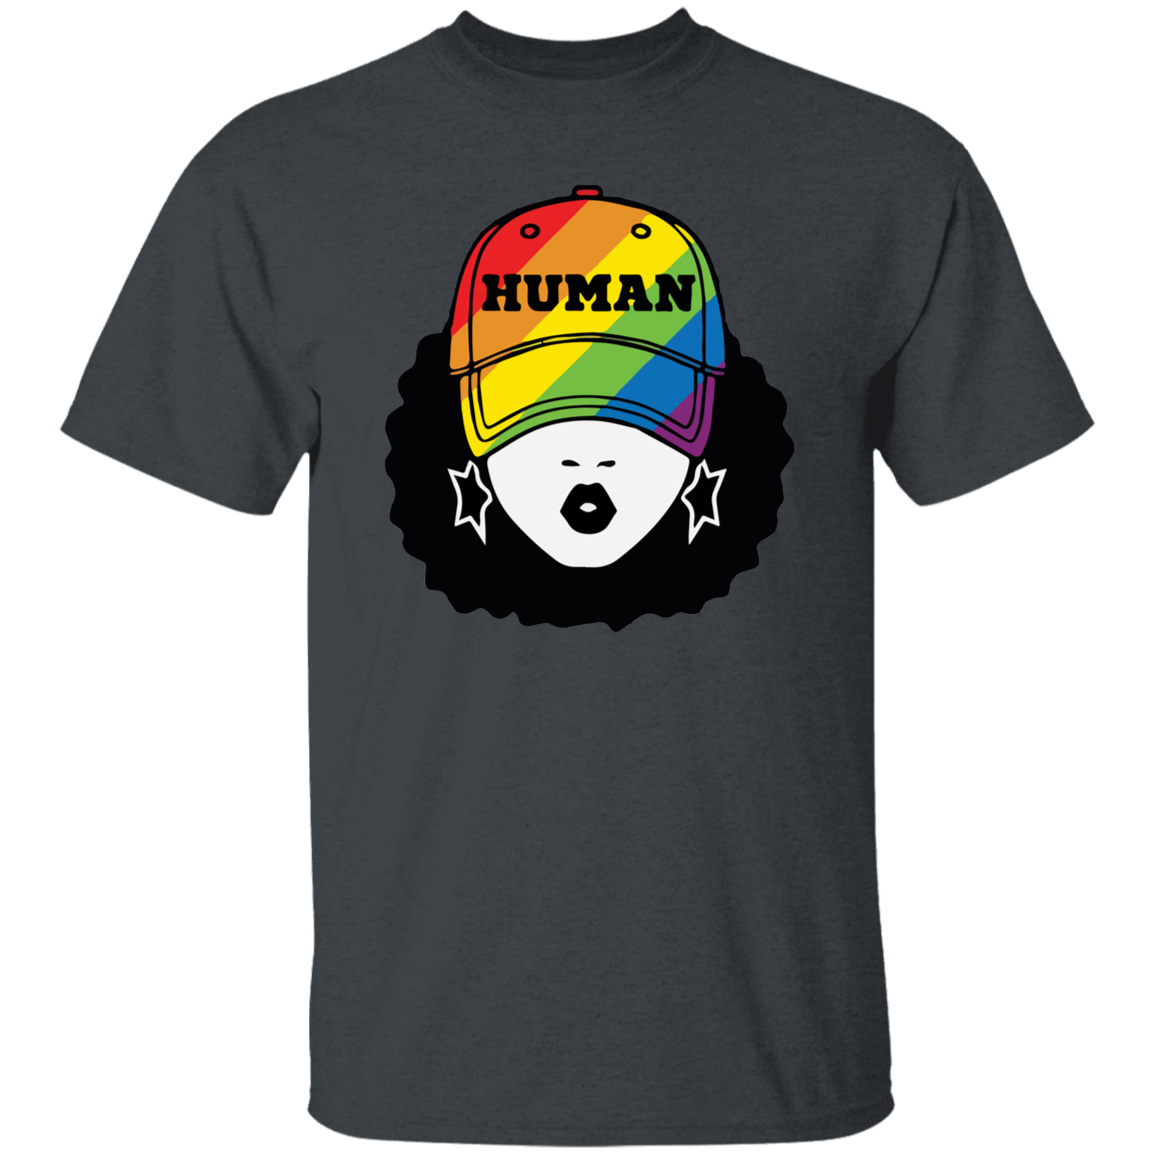 Human 5.3 oz. T-Shirt